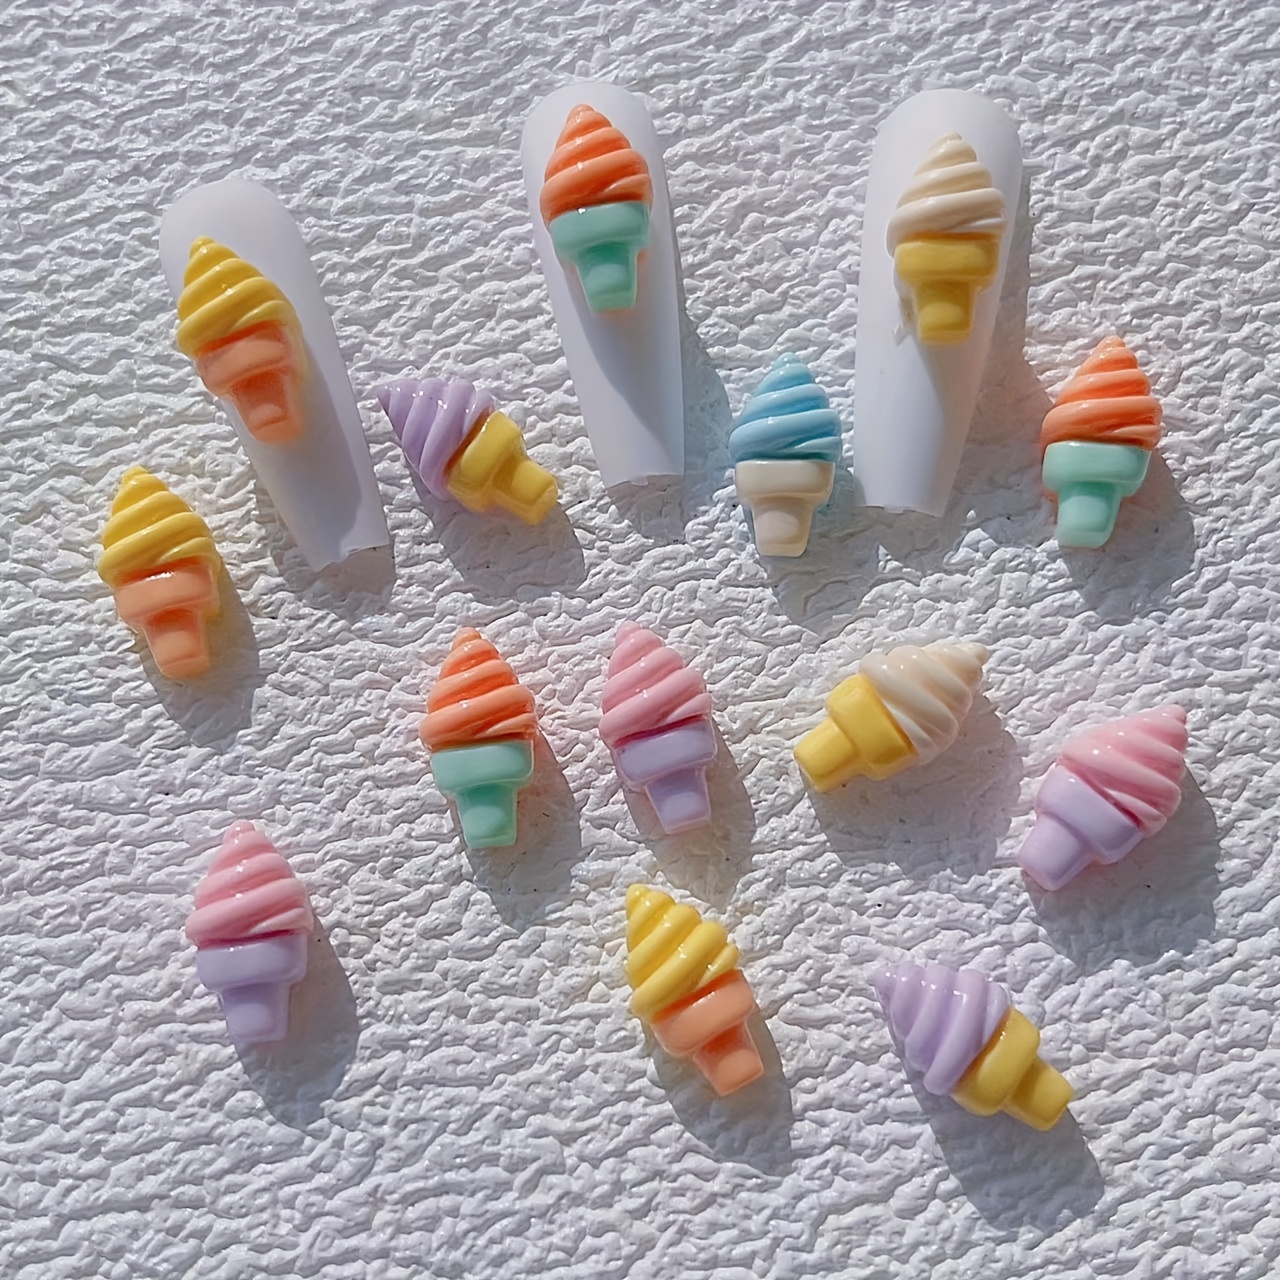 Cute Ice Cream Nail Art Charms 3D Mini Ice Lolly Kawaii Nail